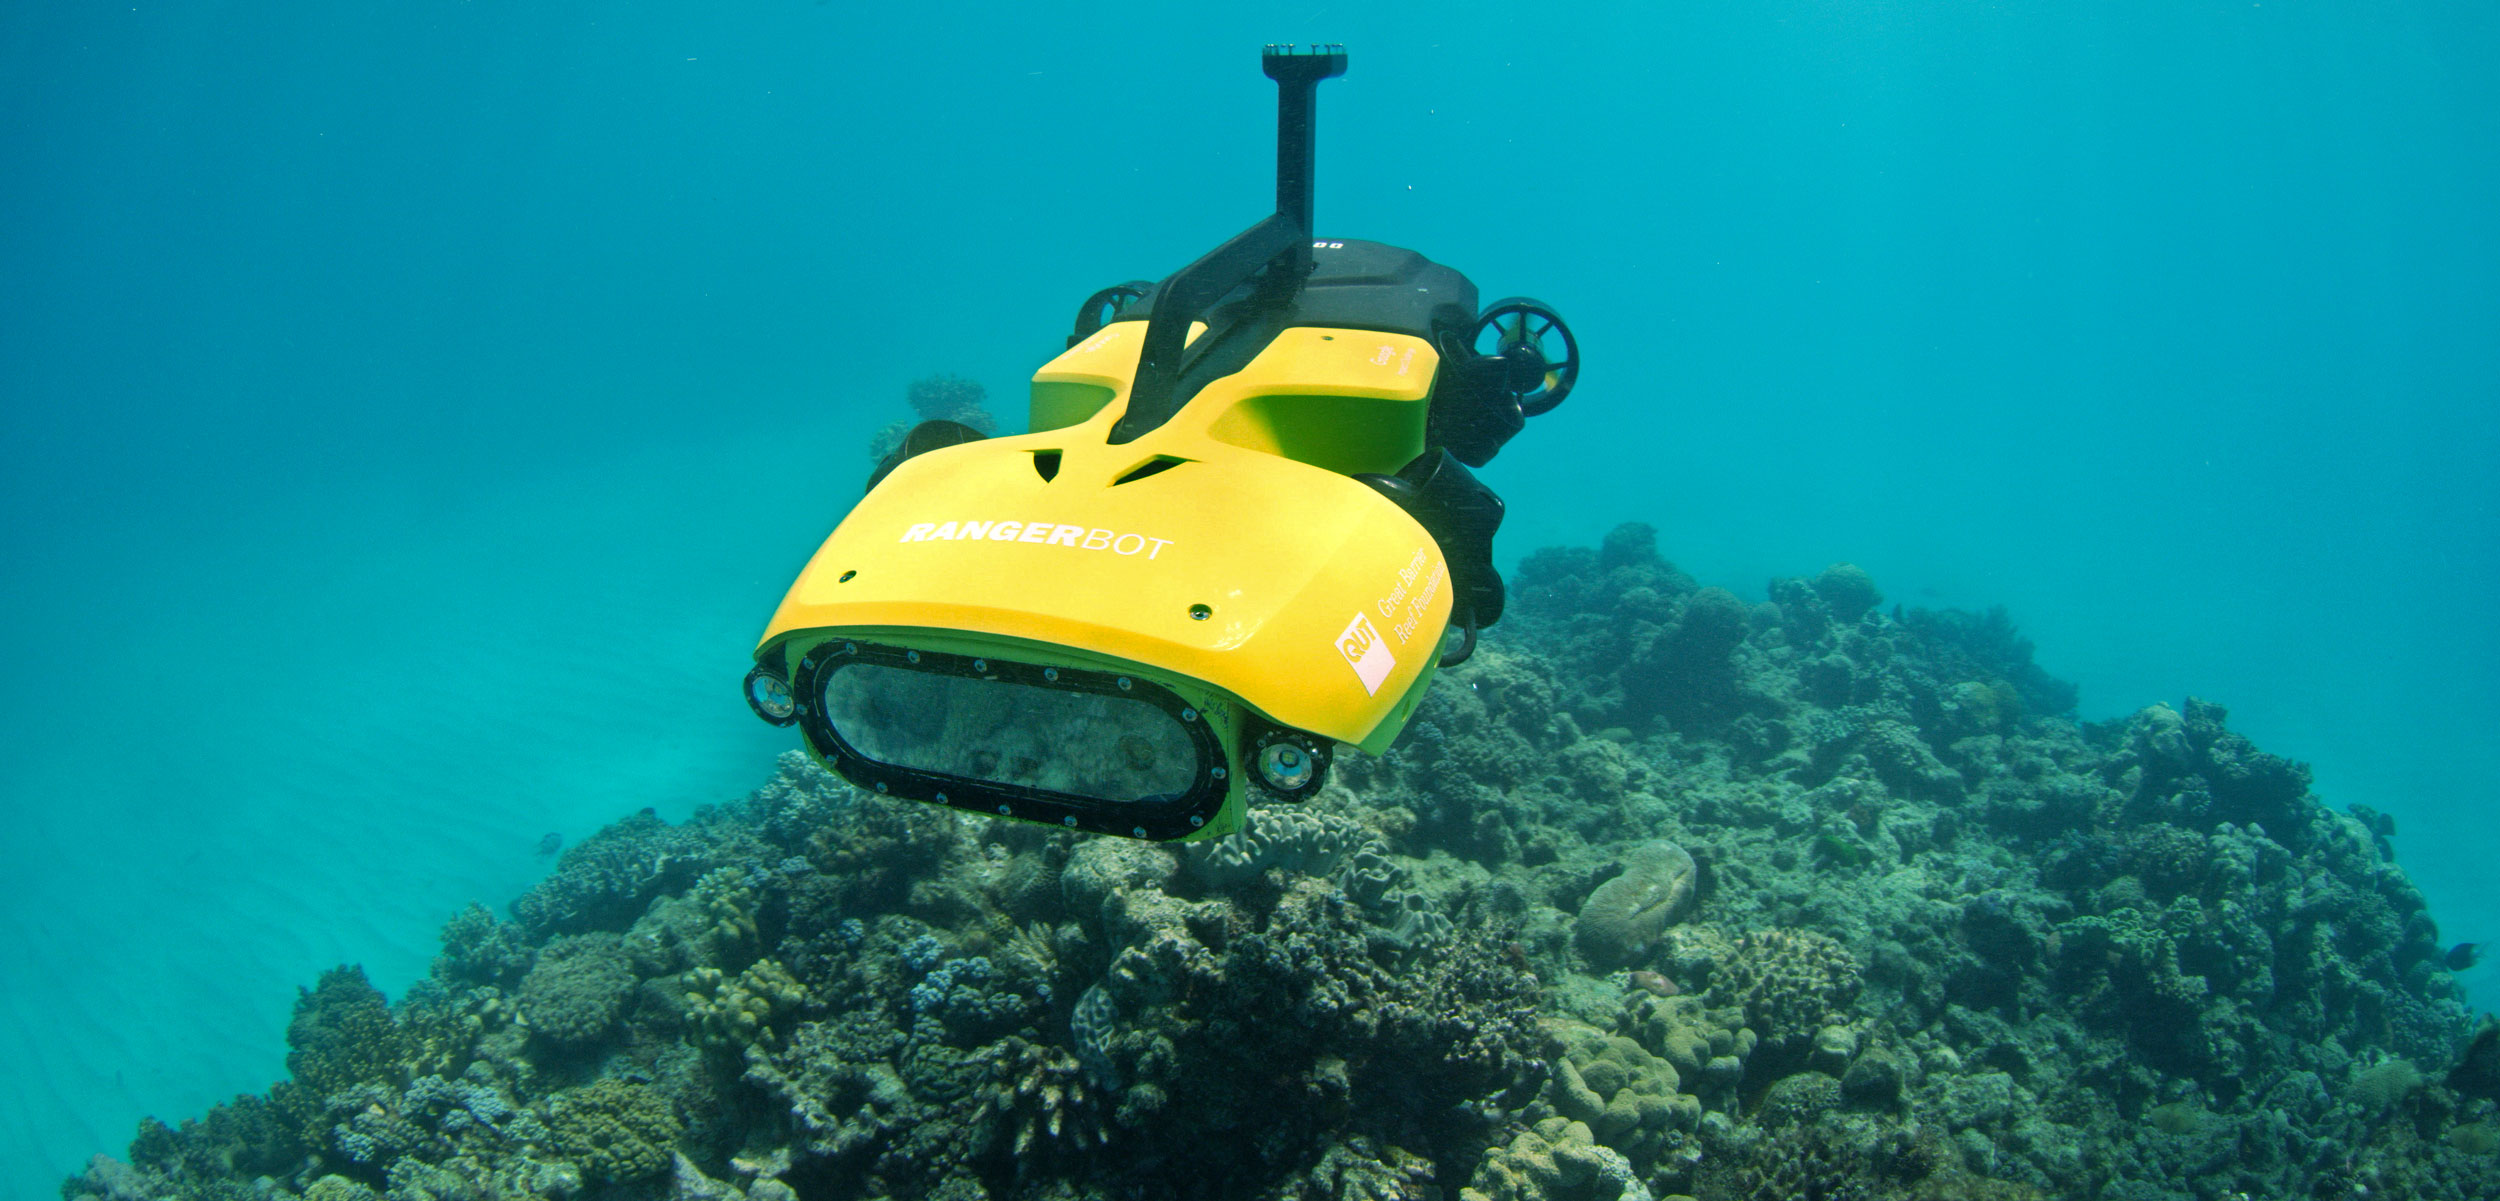 RangerBot underwater